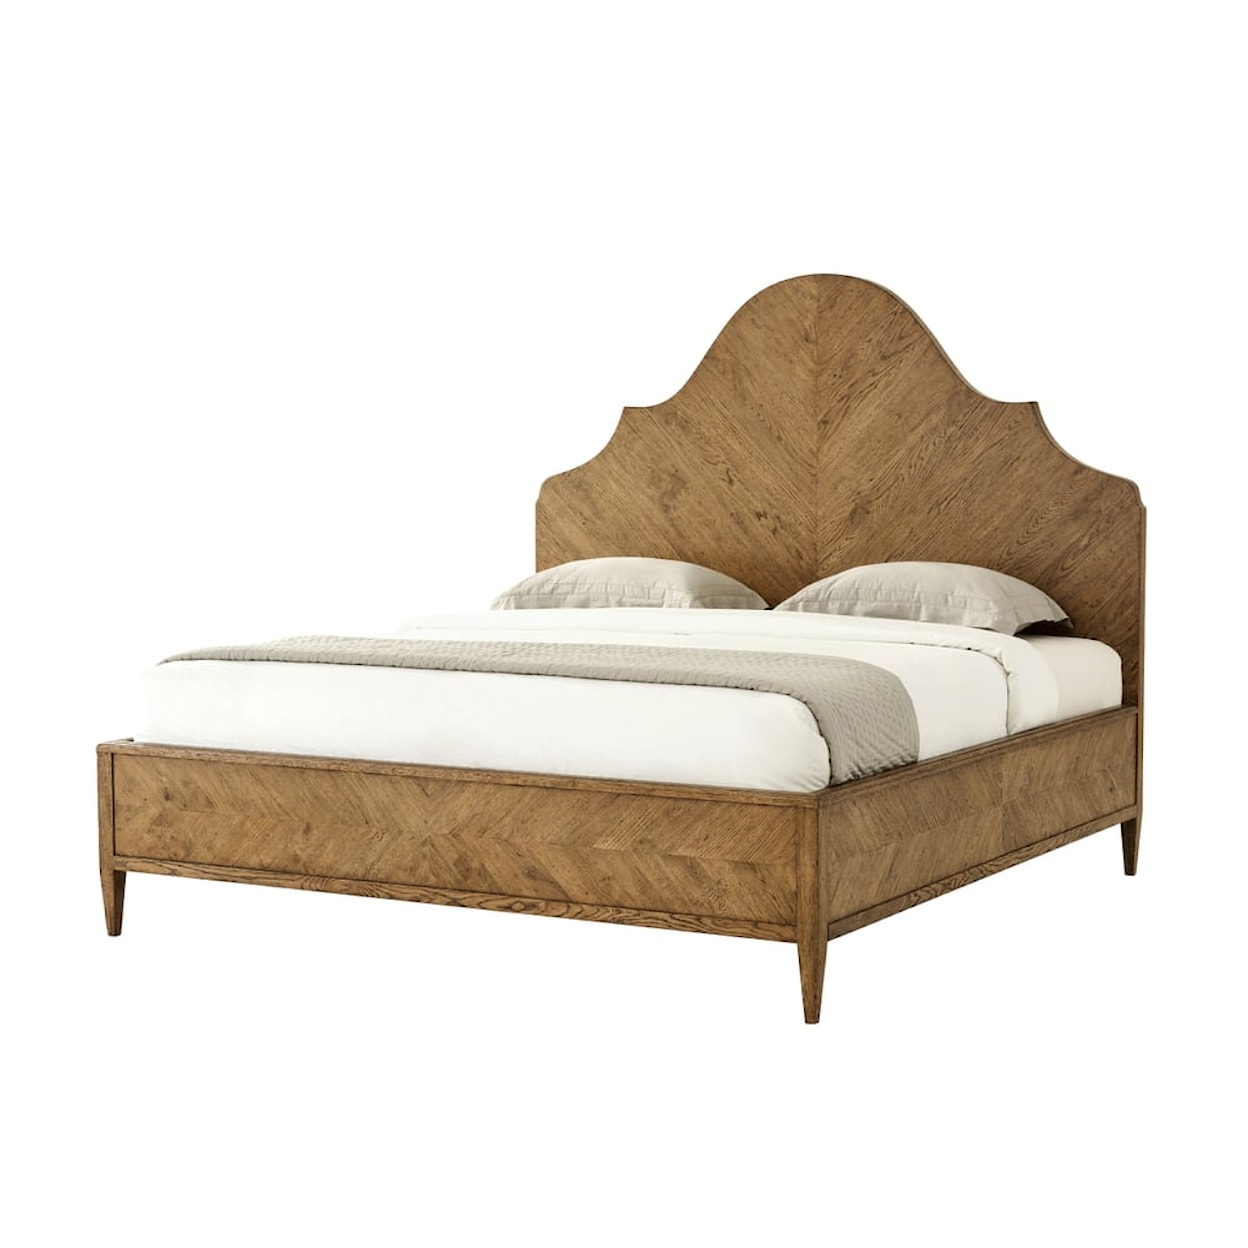 Theodore Alexander Nova Arched Queen Bed